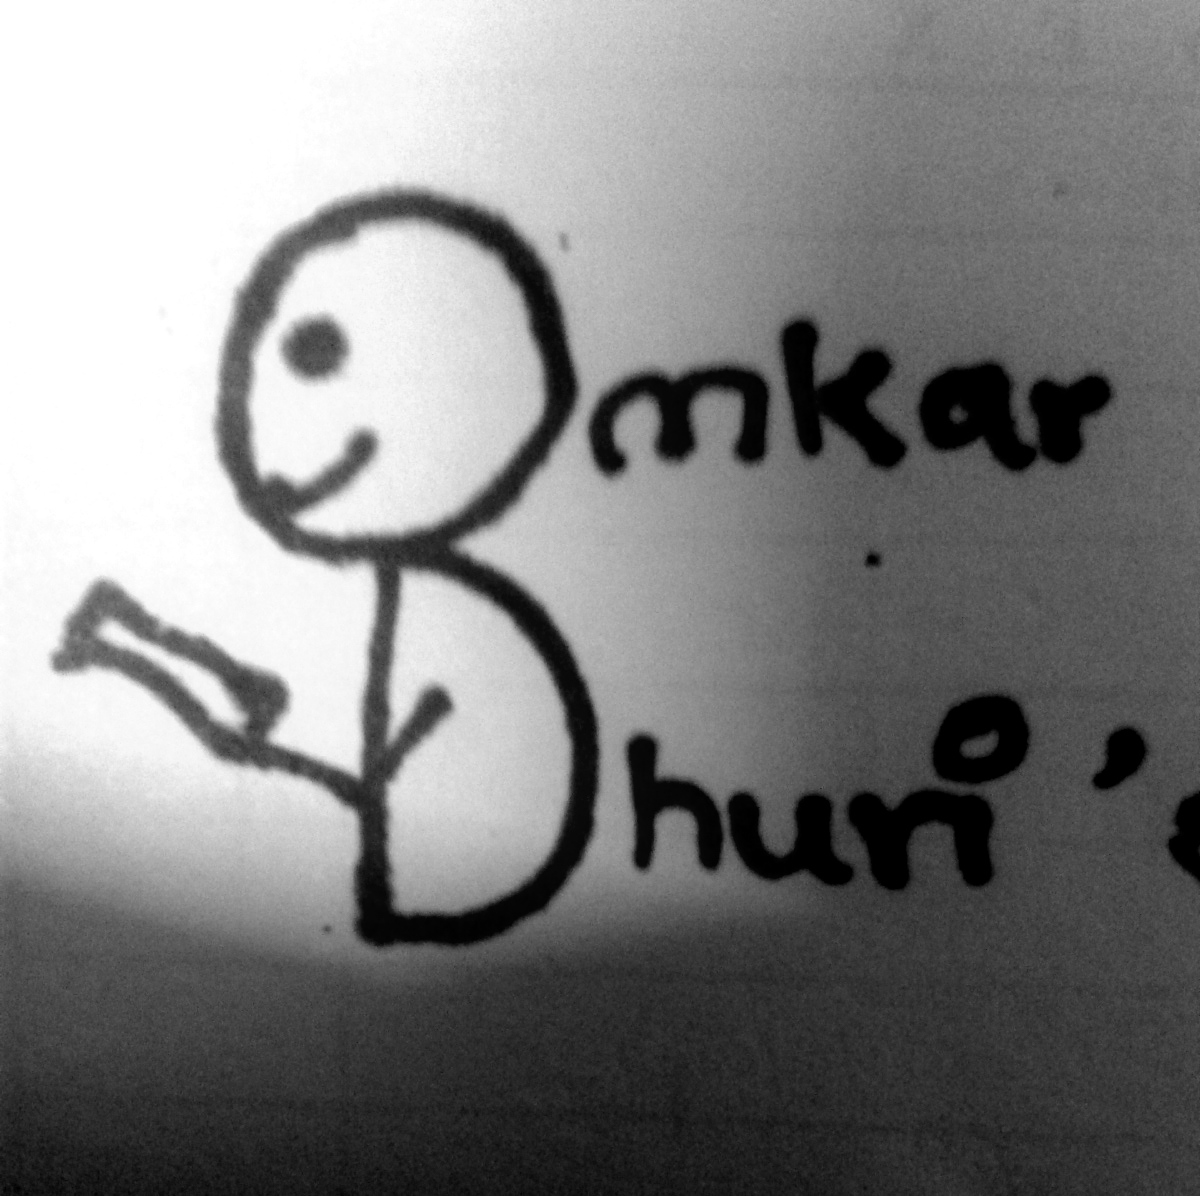 Omkar's Blog!